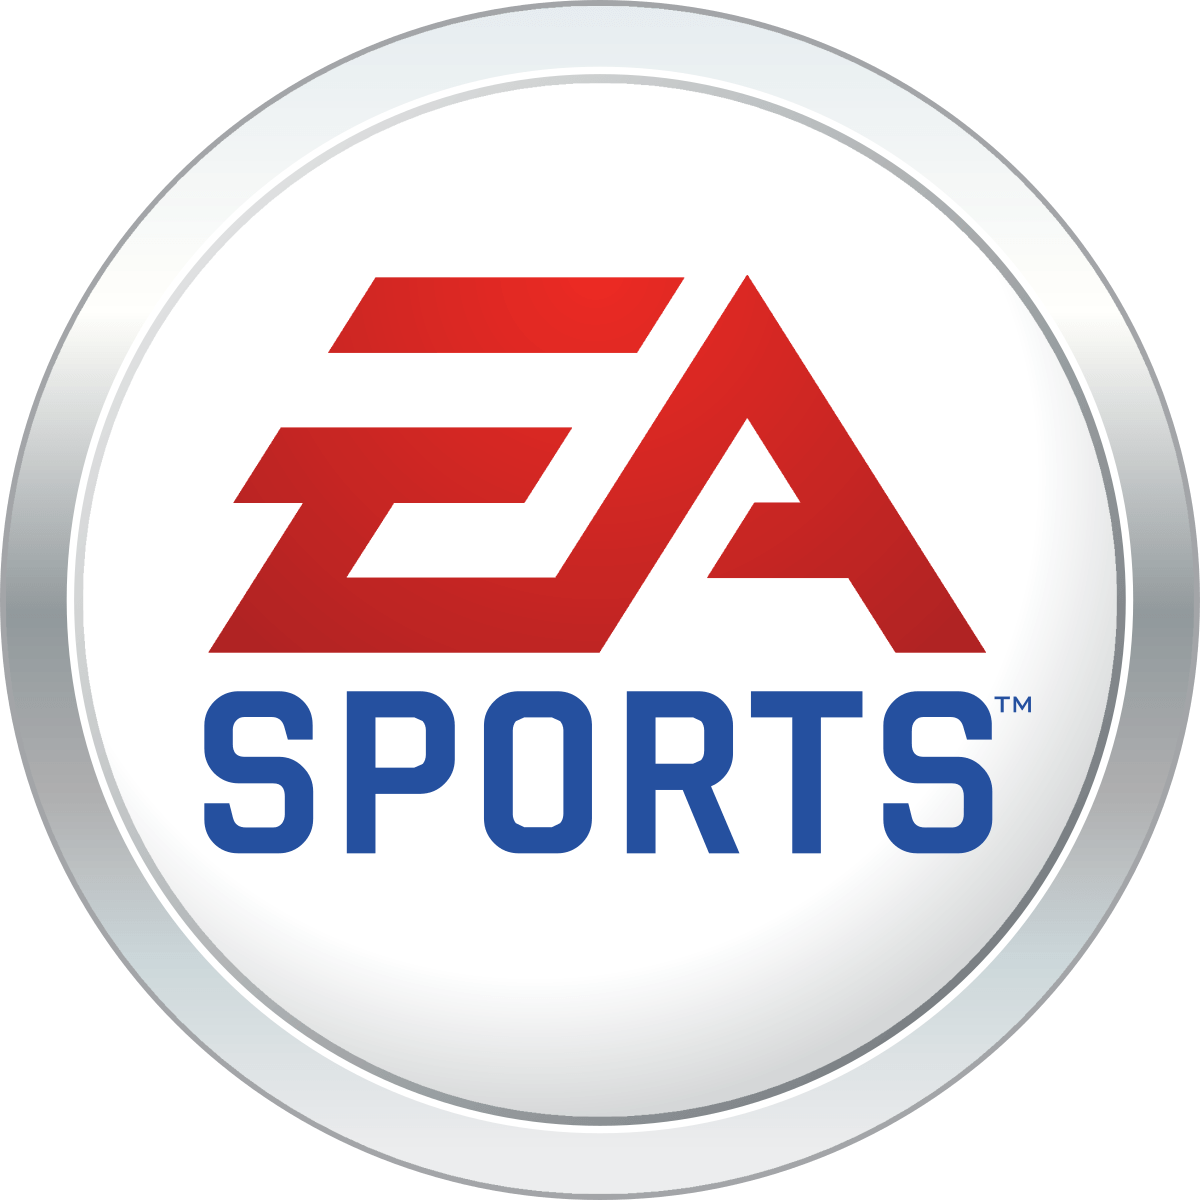 Red Sports Brand Logo - EA Sports